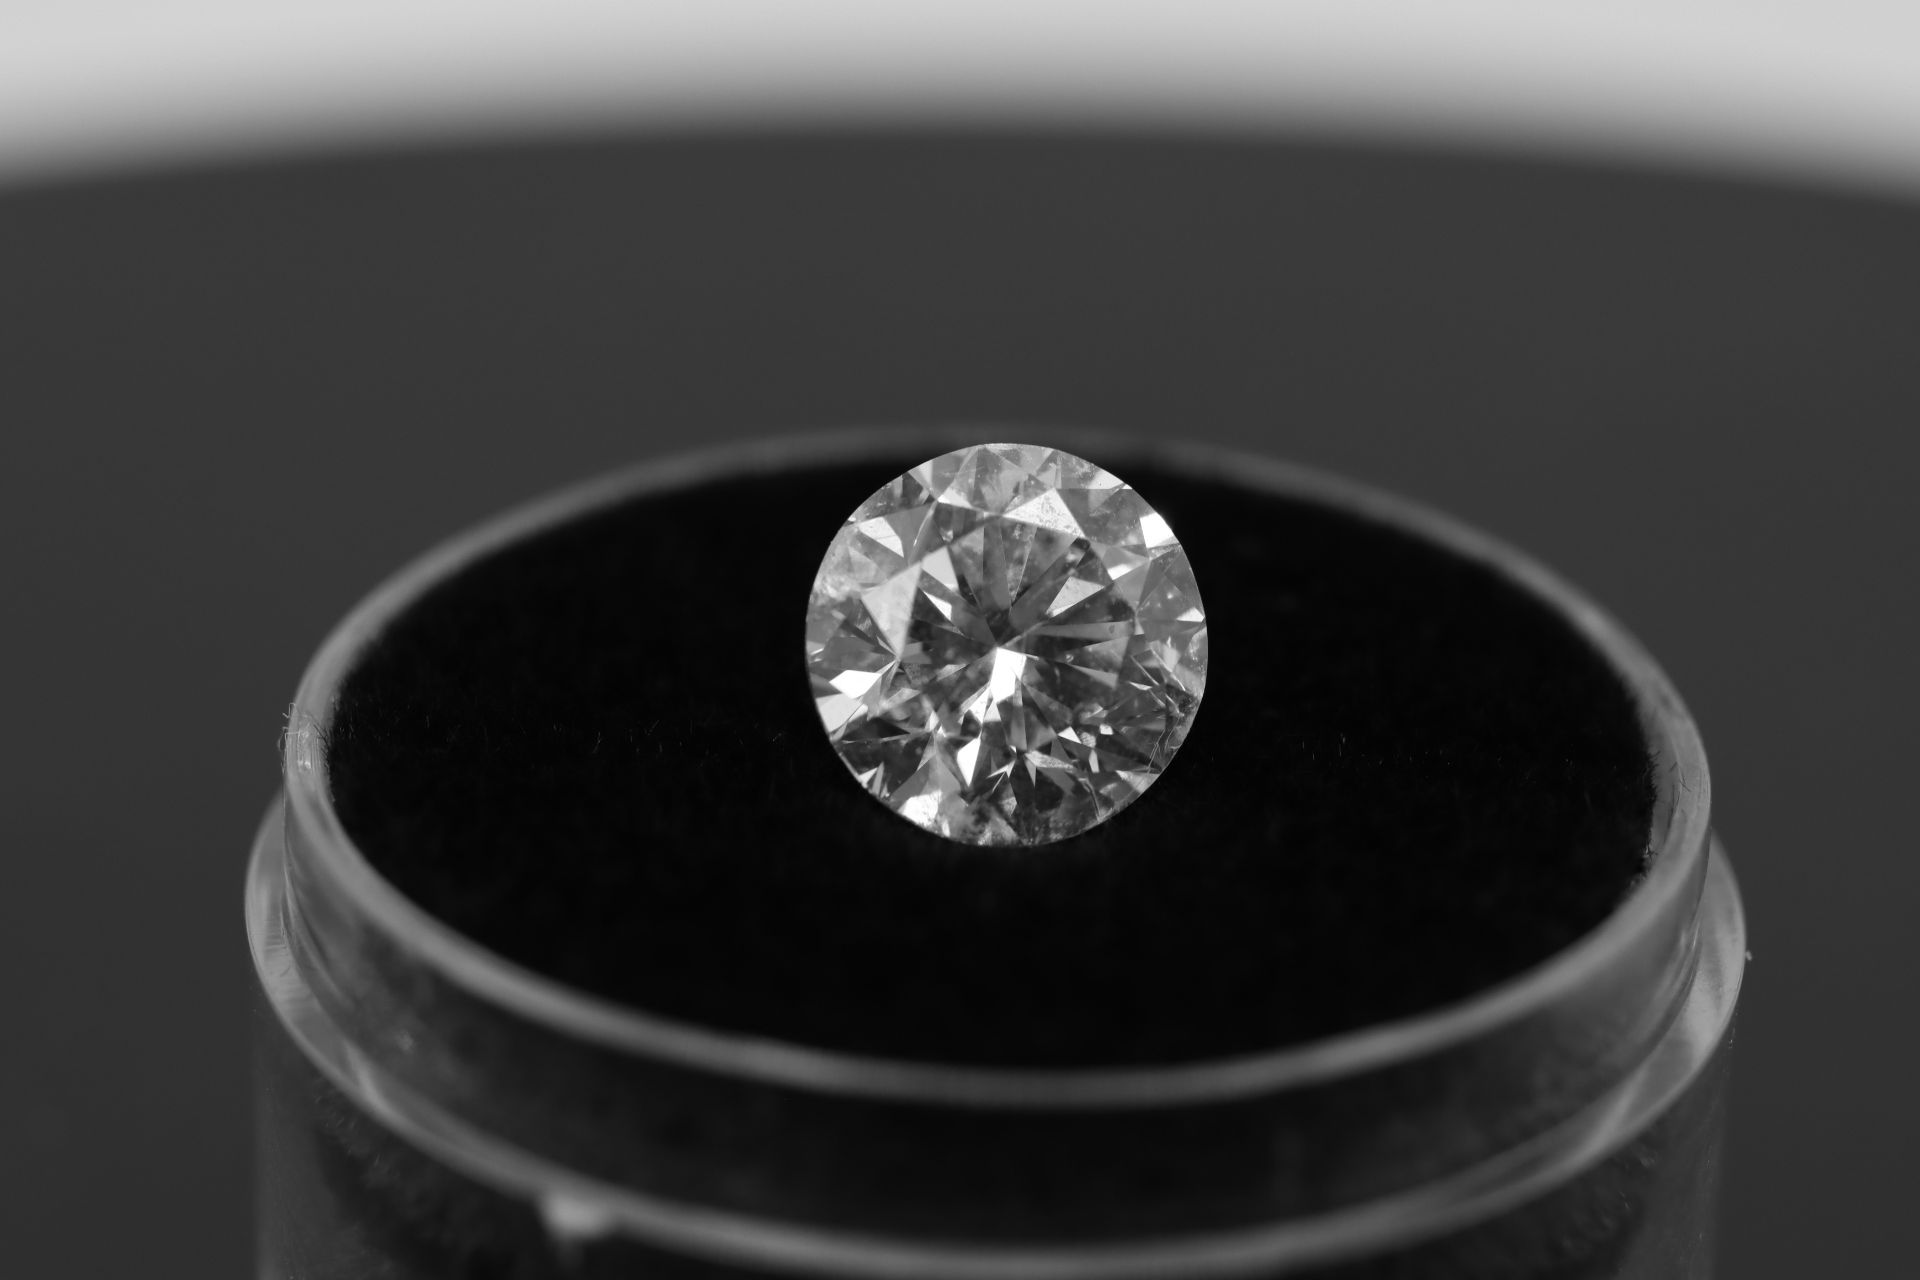 Single - Round Brilliant Cut Natural Diamond 2.00 Carat Colour D Clarity VS2 - AGI Cert DL190531057 - Image 9 of 12